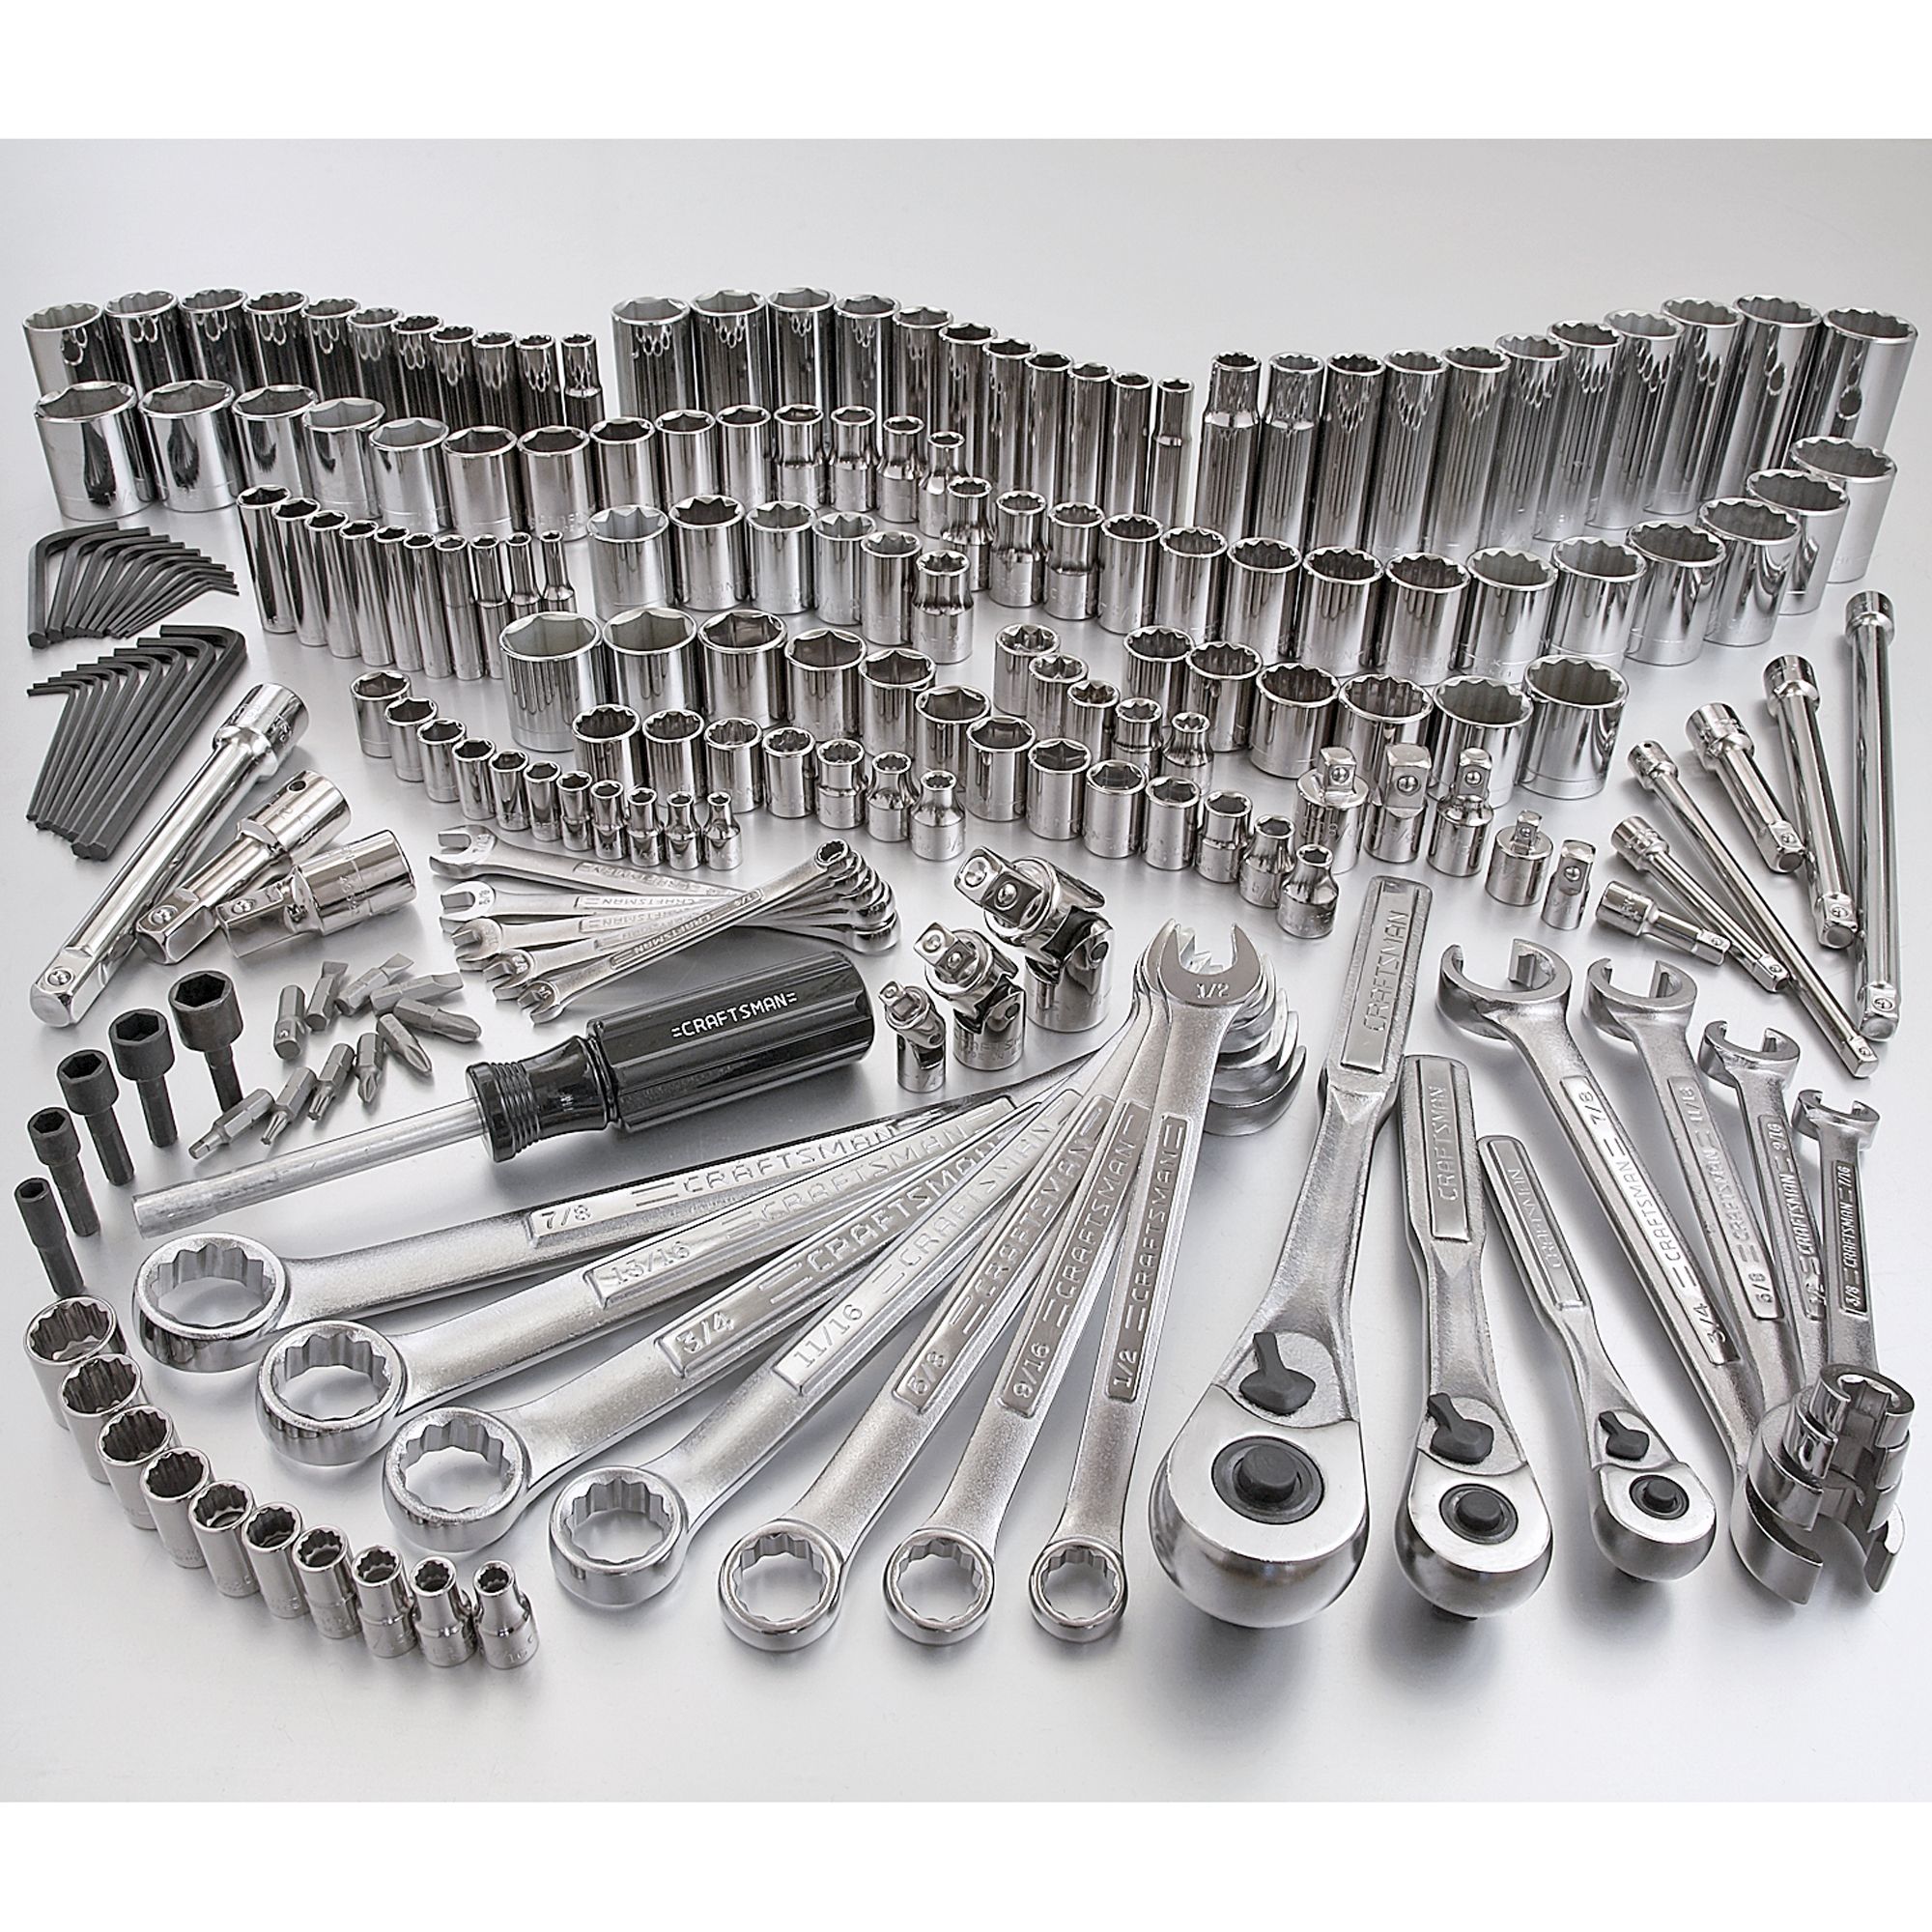 Craftsman 201 pc. All Inch Mechanics Tool Set